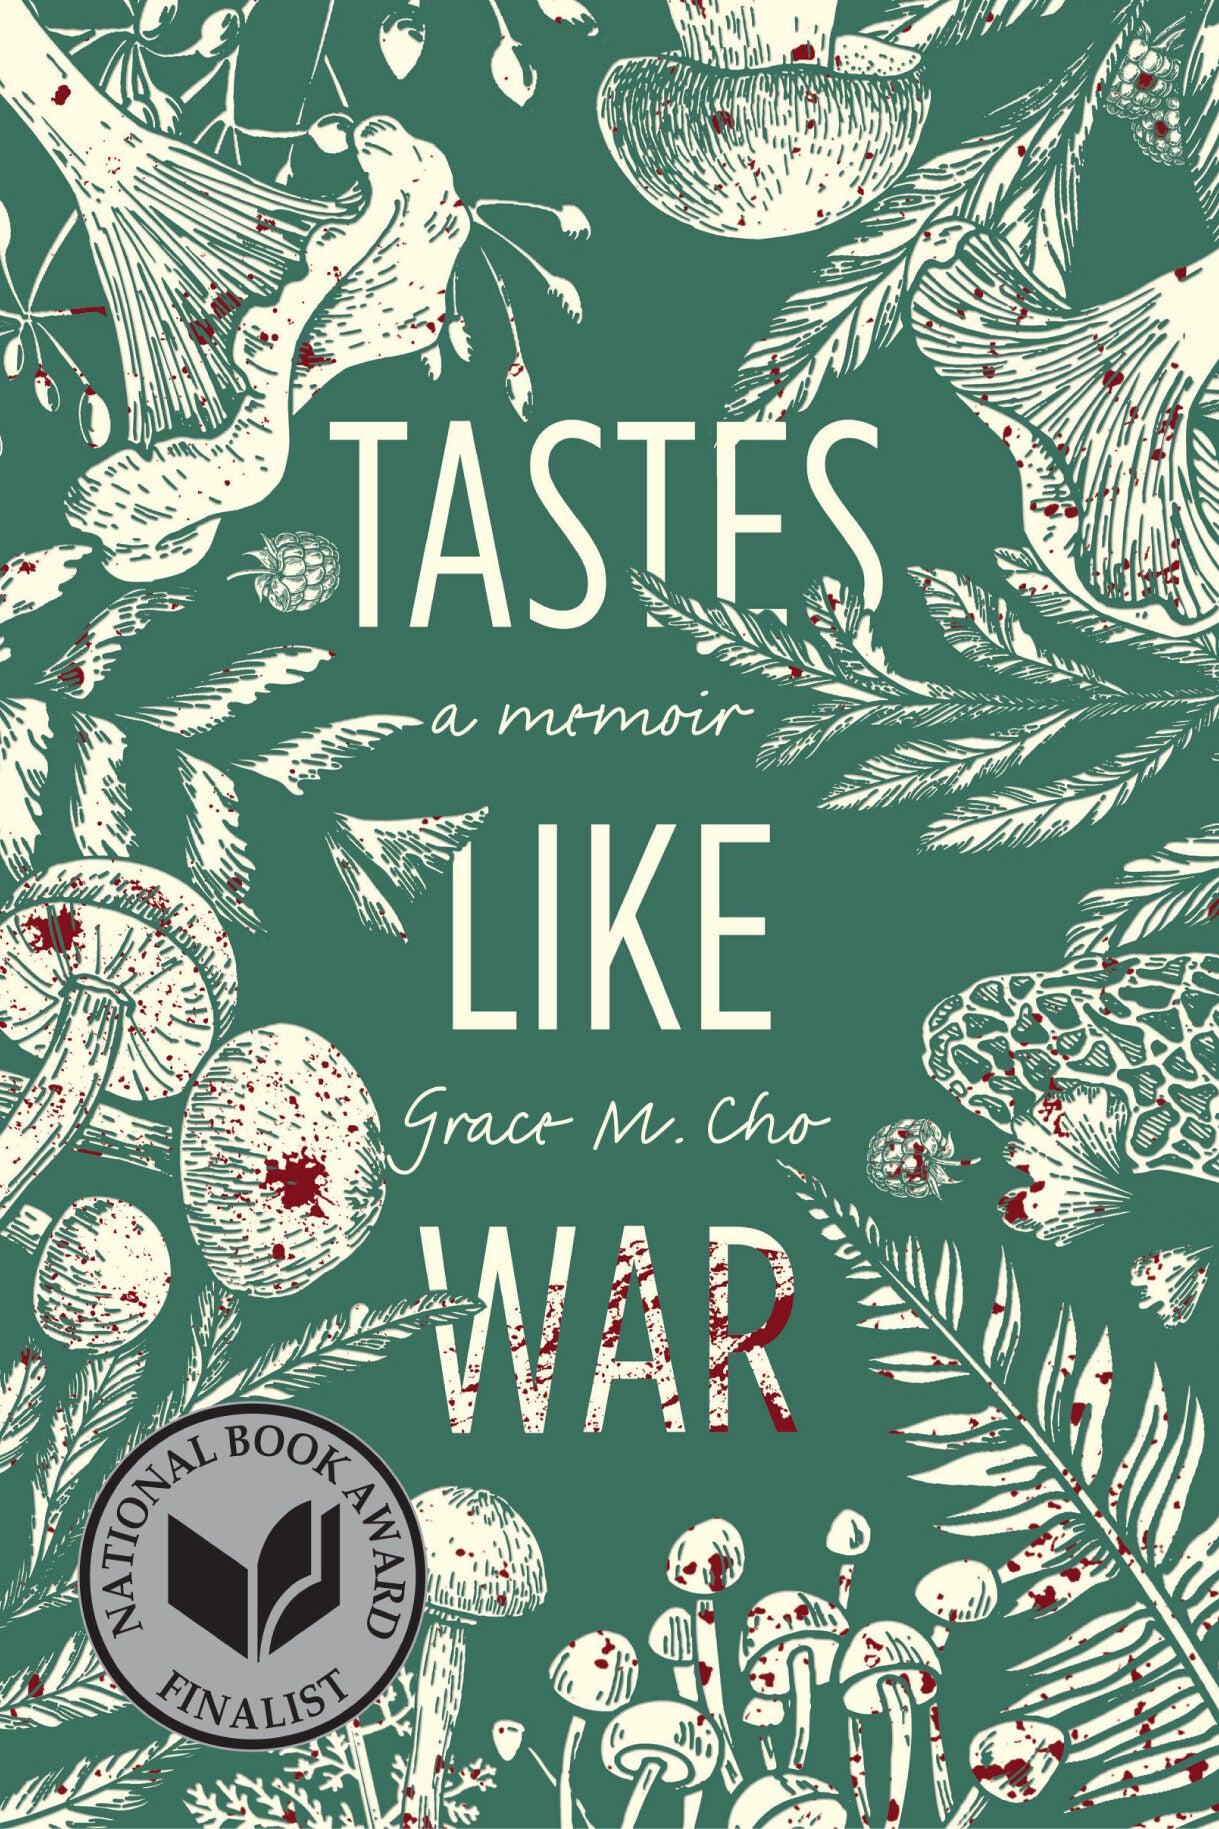 Book cover: "Tastes Like War."